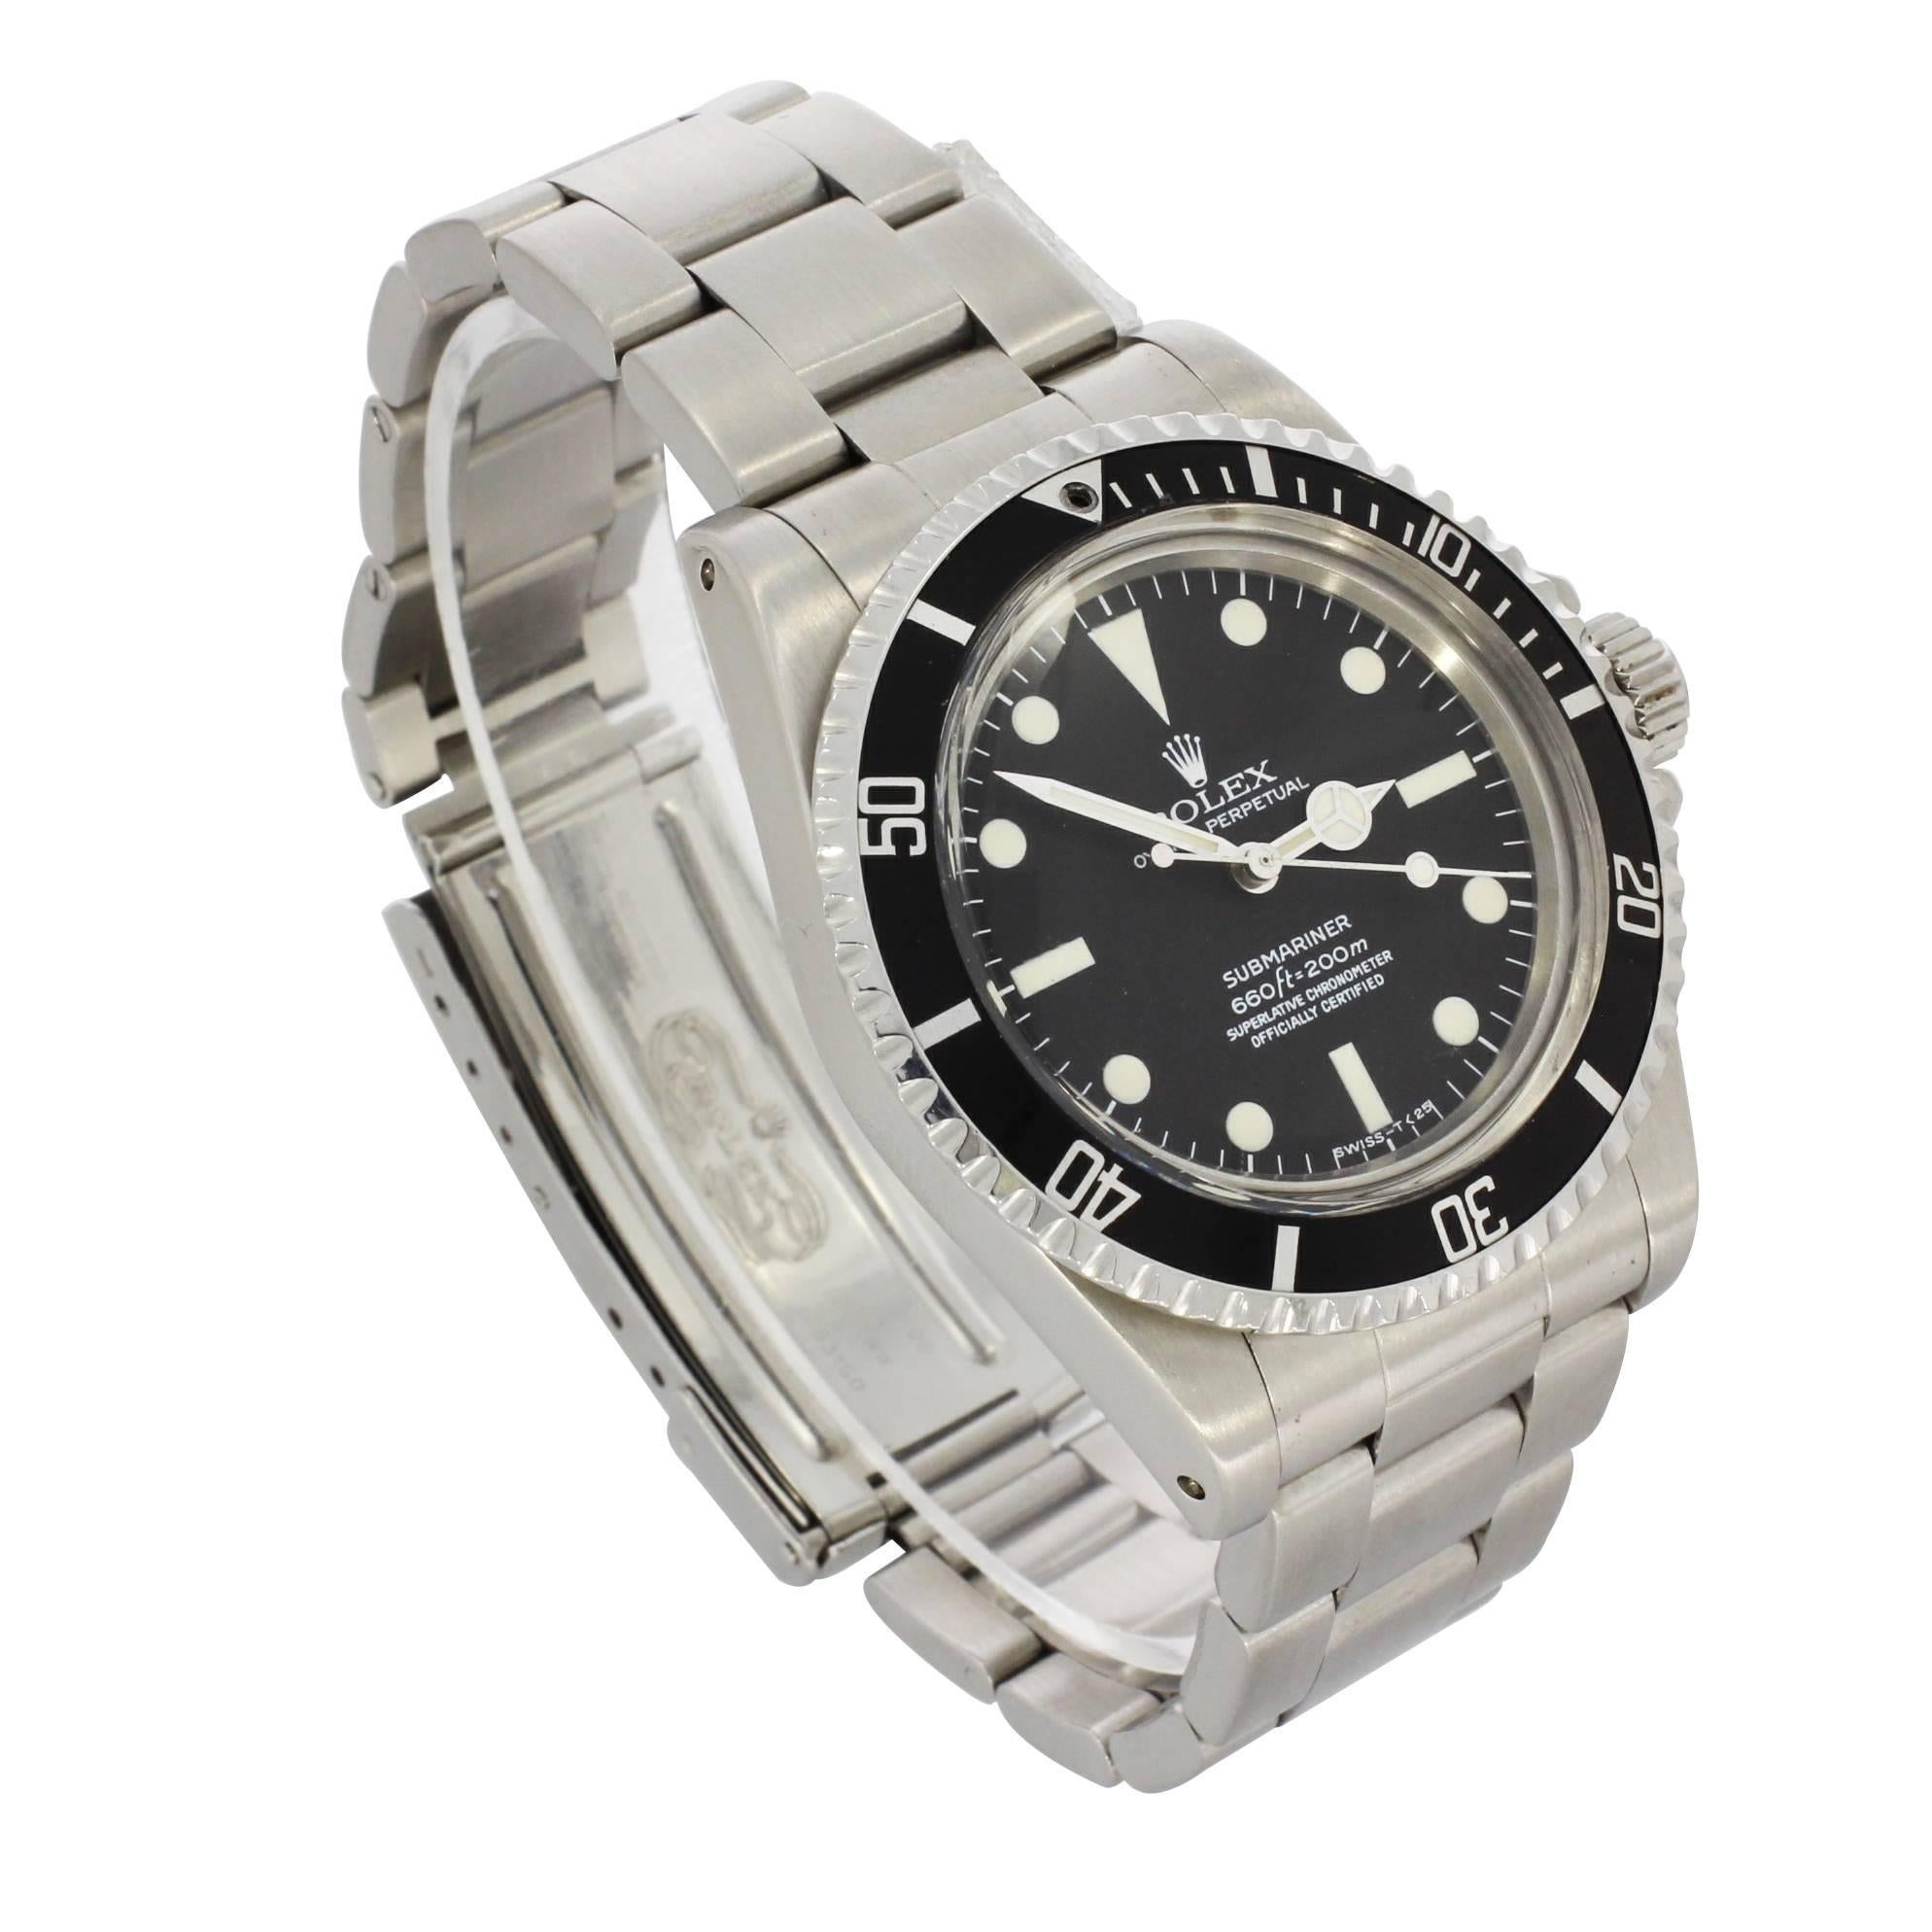 Rolex Stainless Steel Submariner Original Dial Wristwatch Ref 5512 For Sale 3